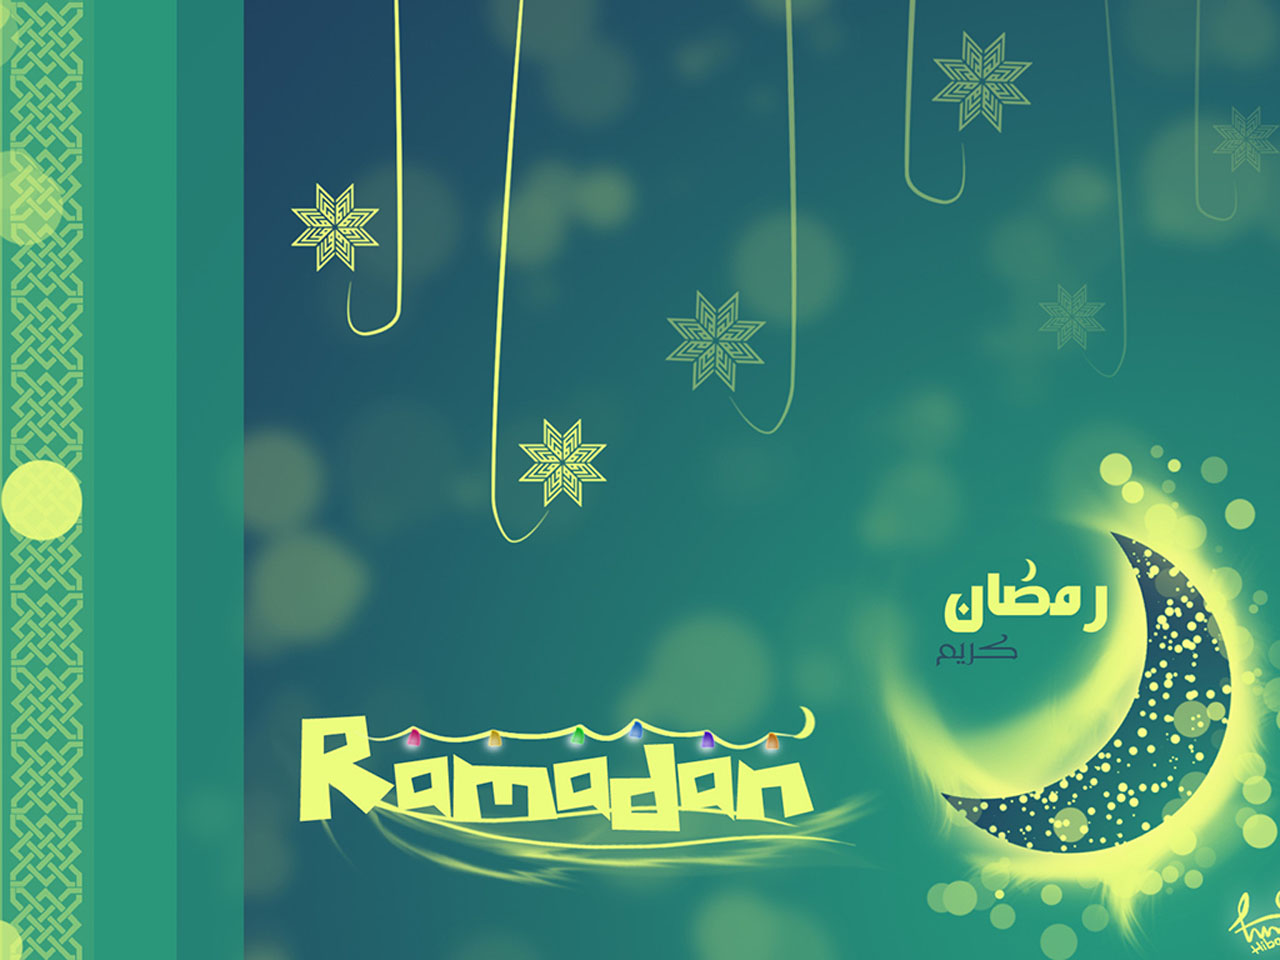 Ramadan Background Animated Ramadan Wallpaper Hd 23144